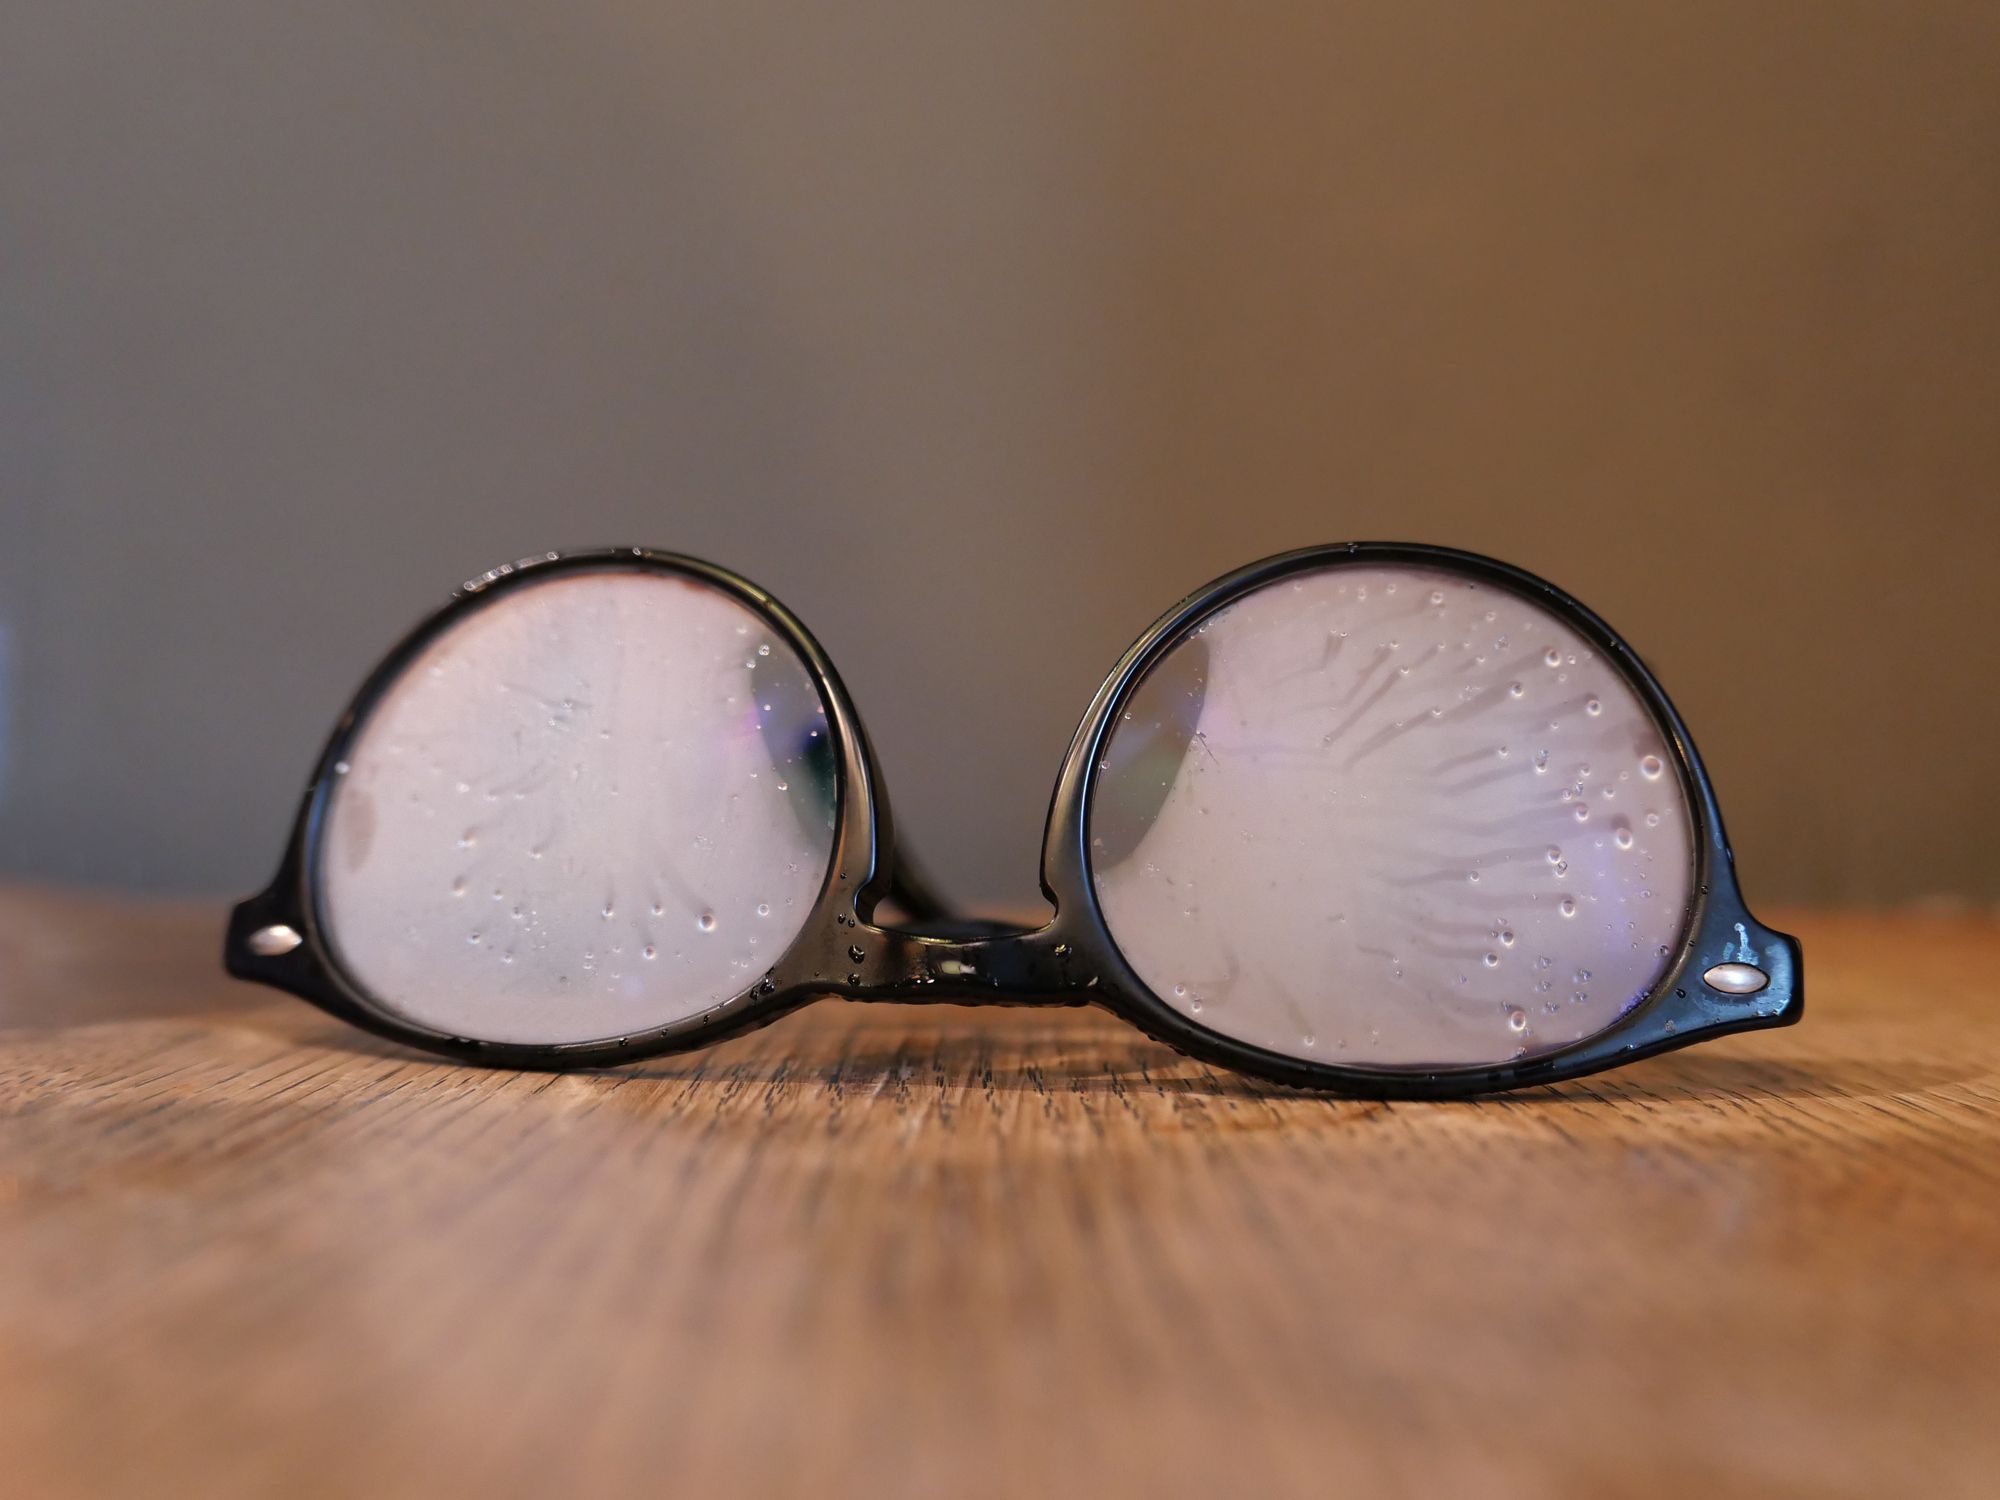 Foggy eyeglasses; Getty Images